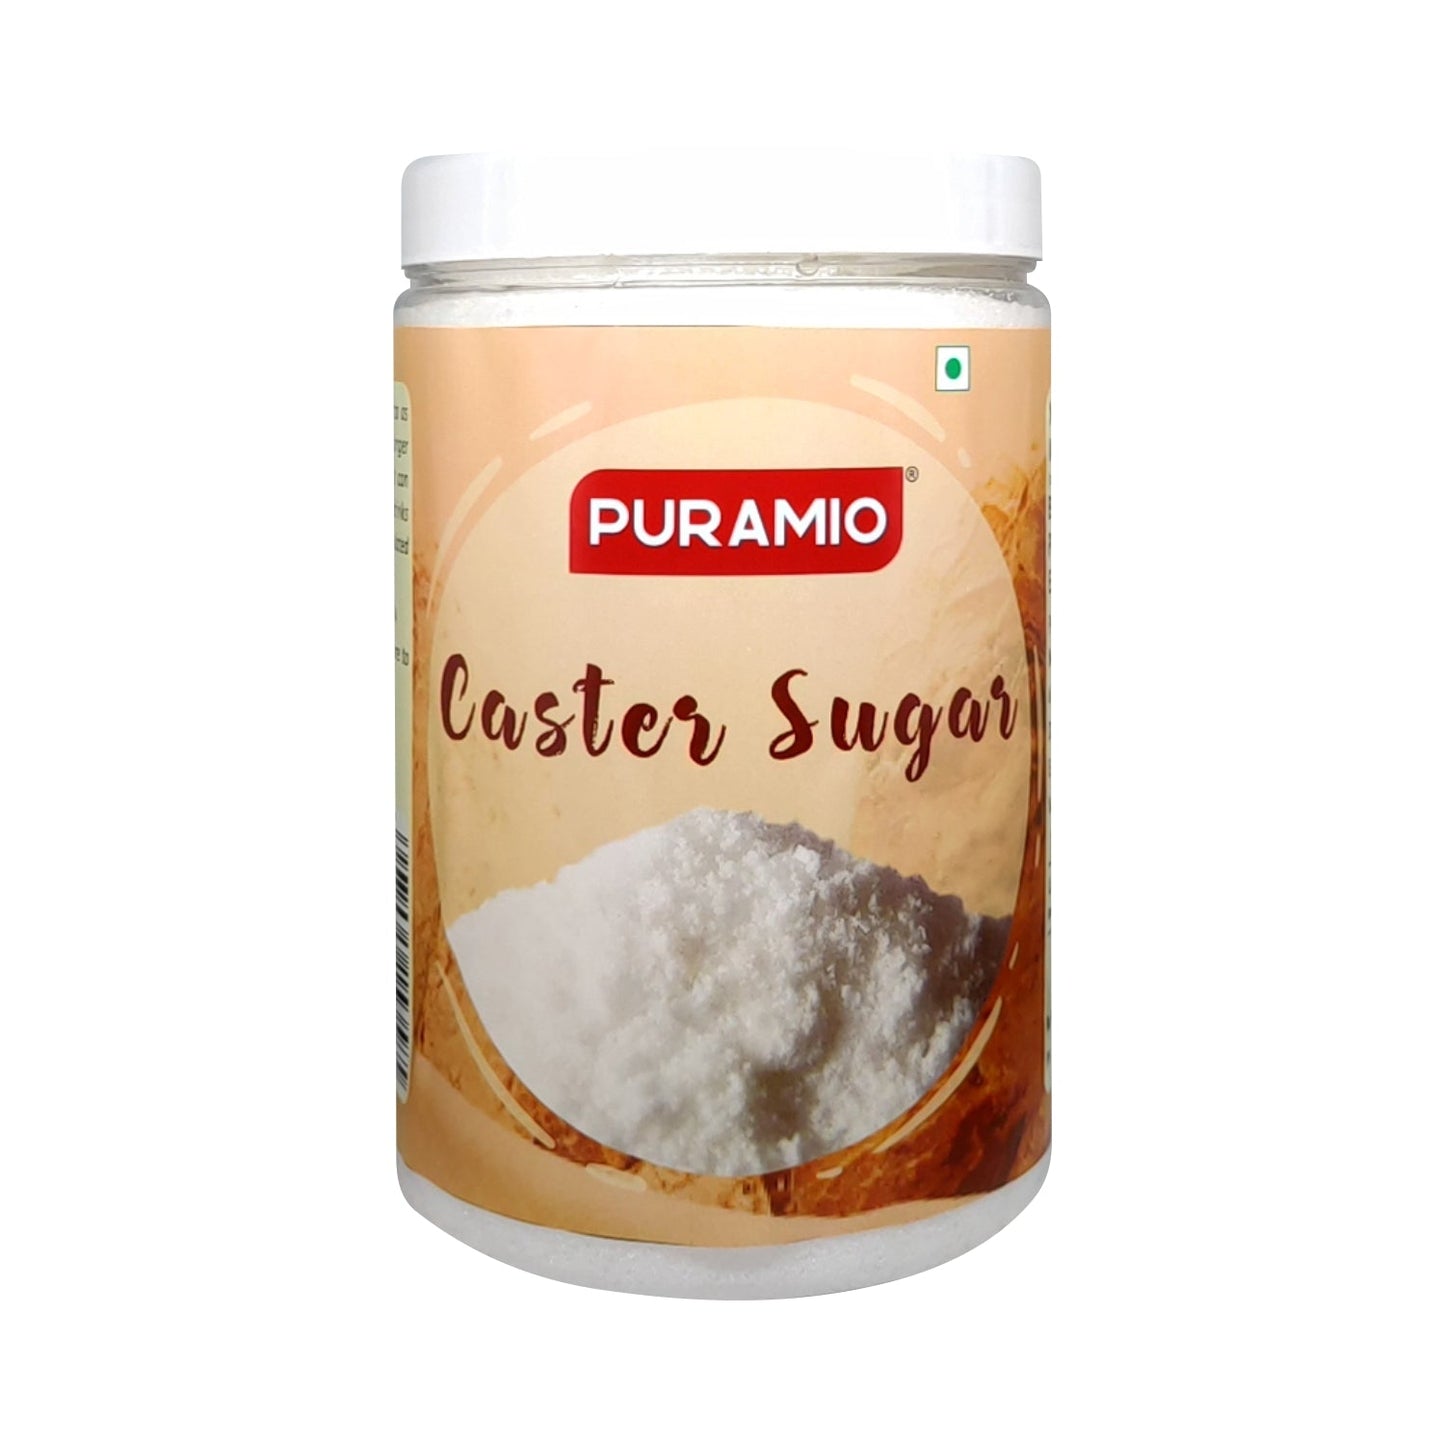 Puramio Caster Sugar